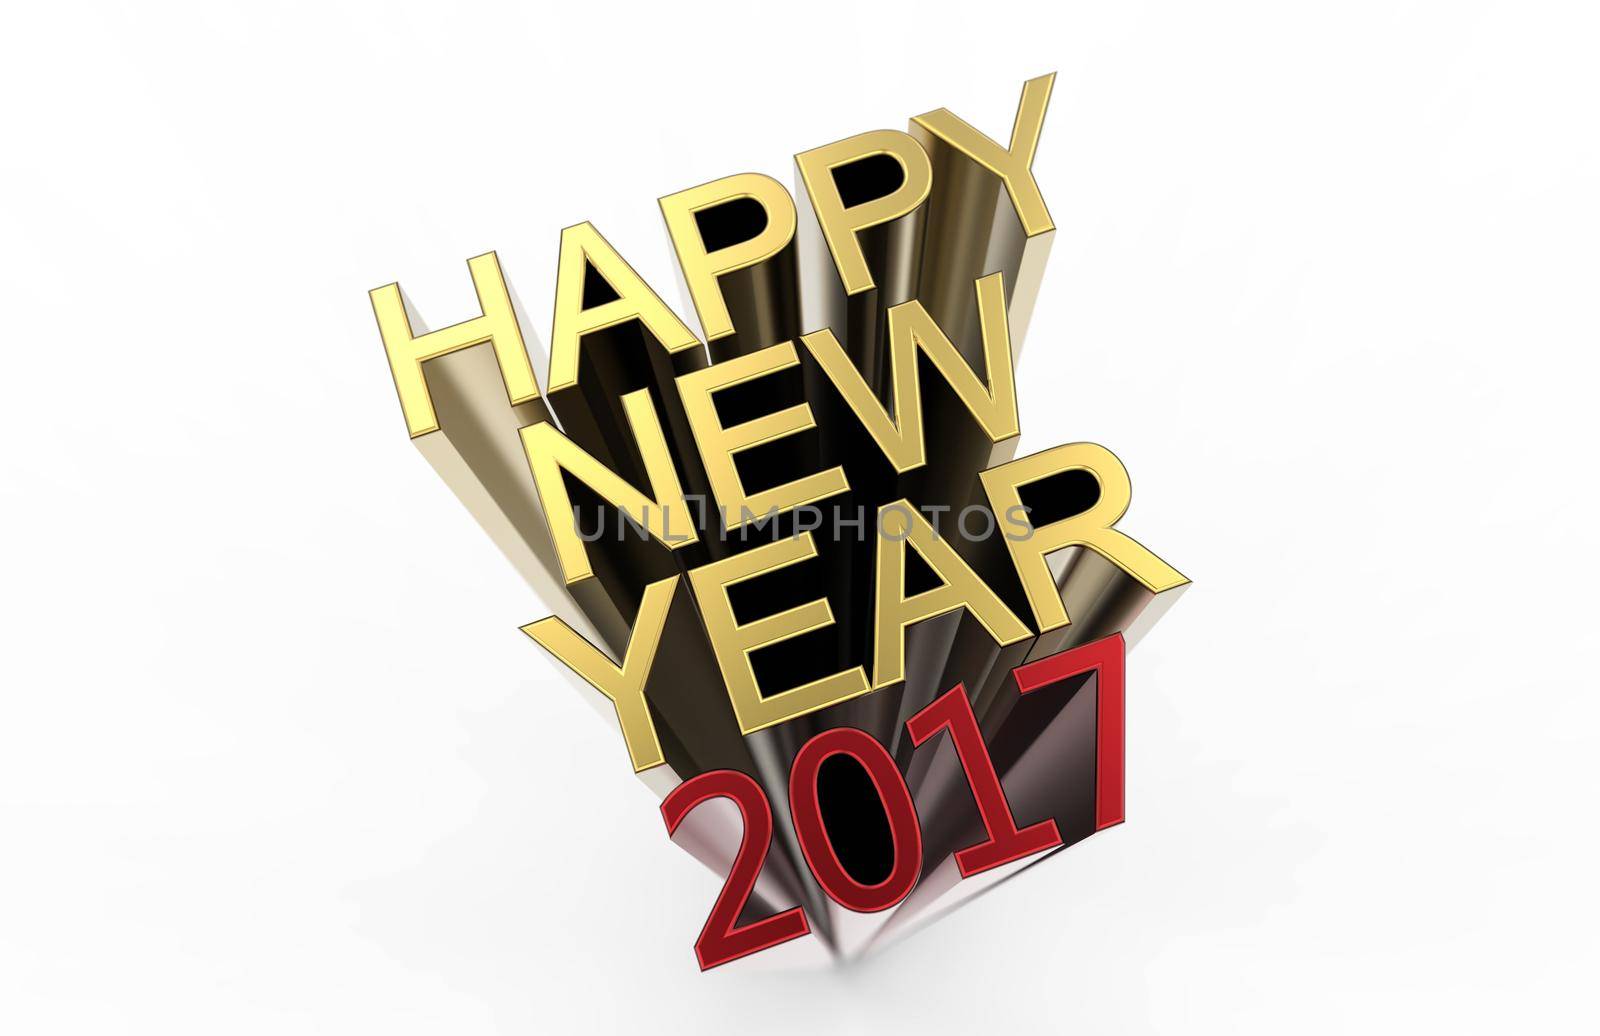 Happy new year 2017 by cla78